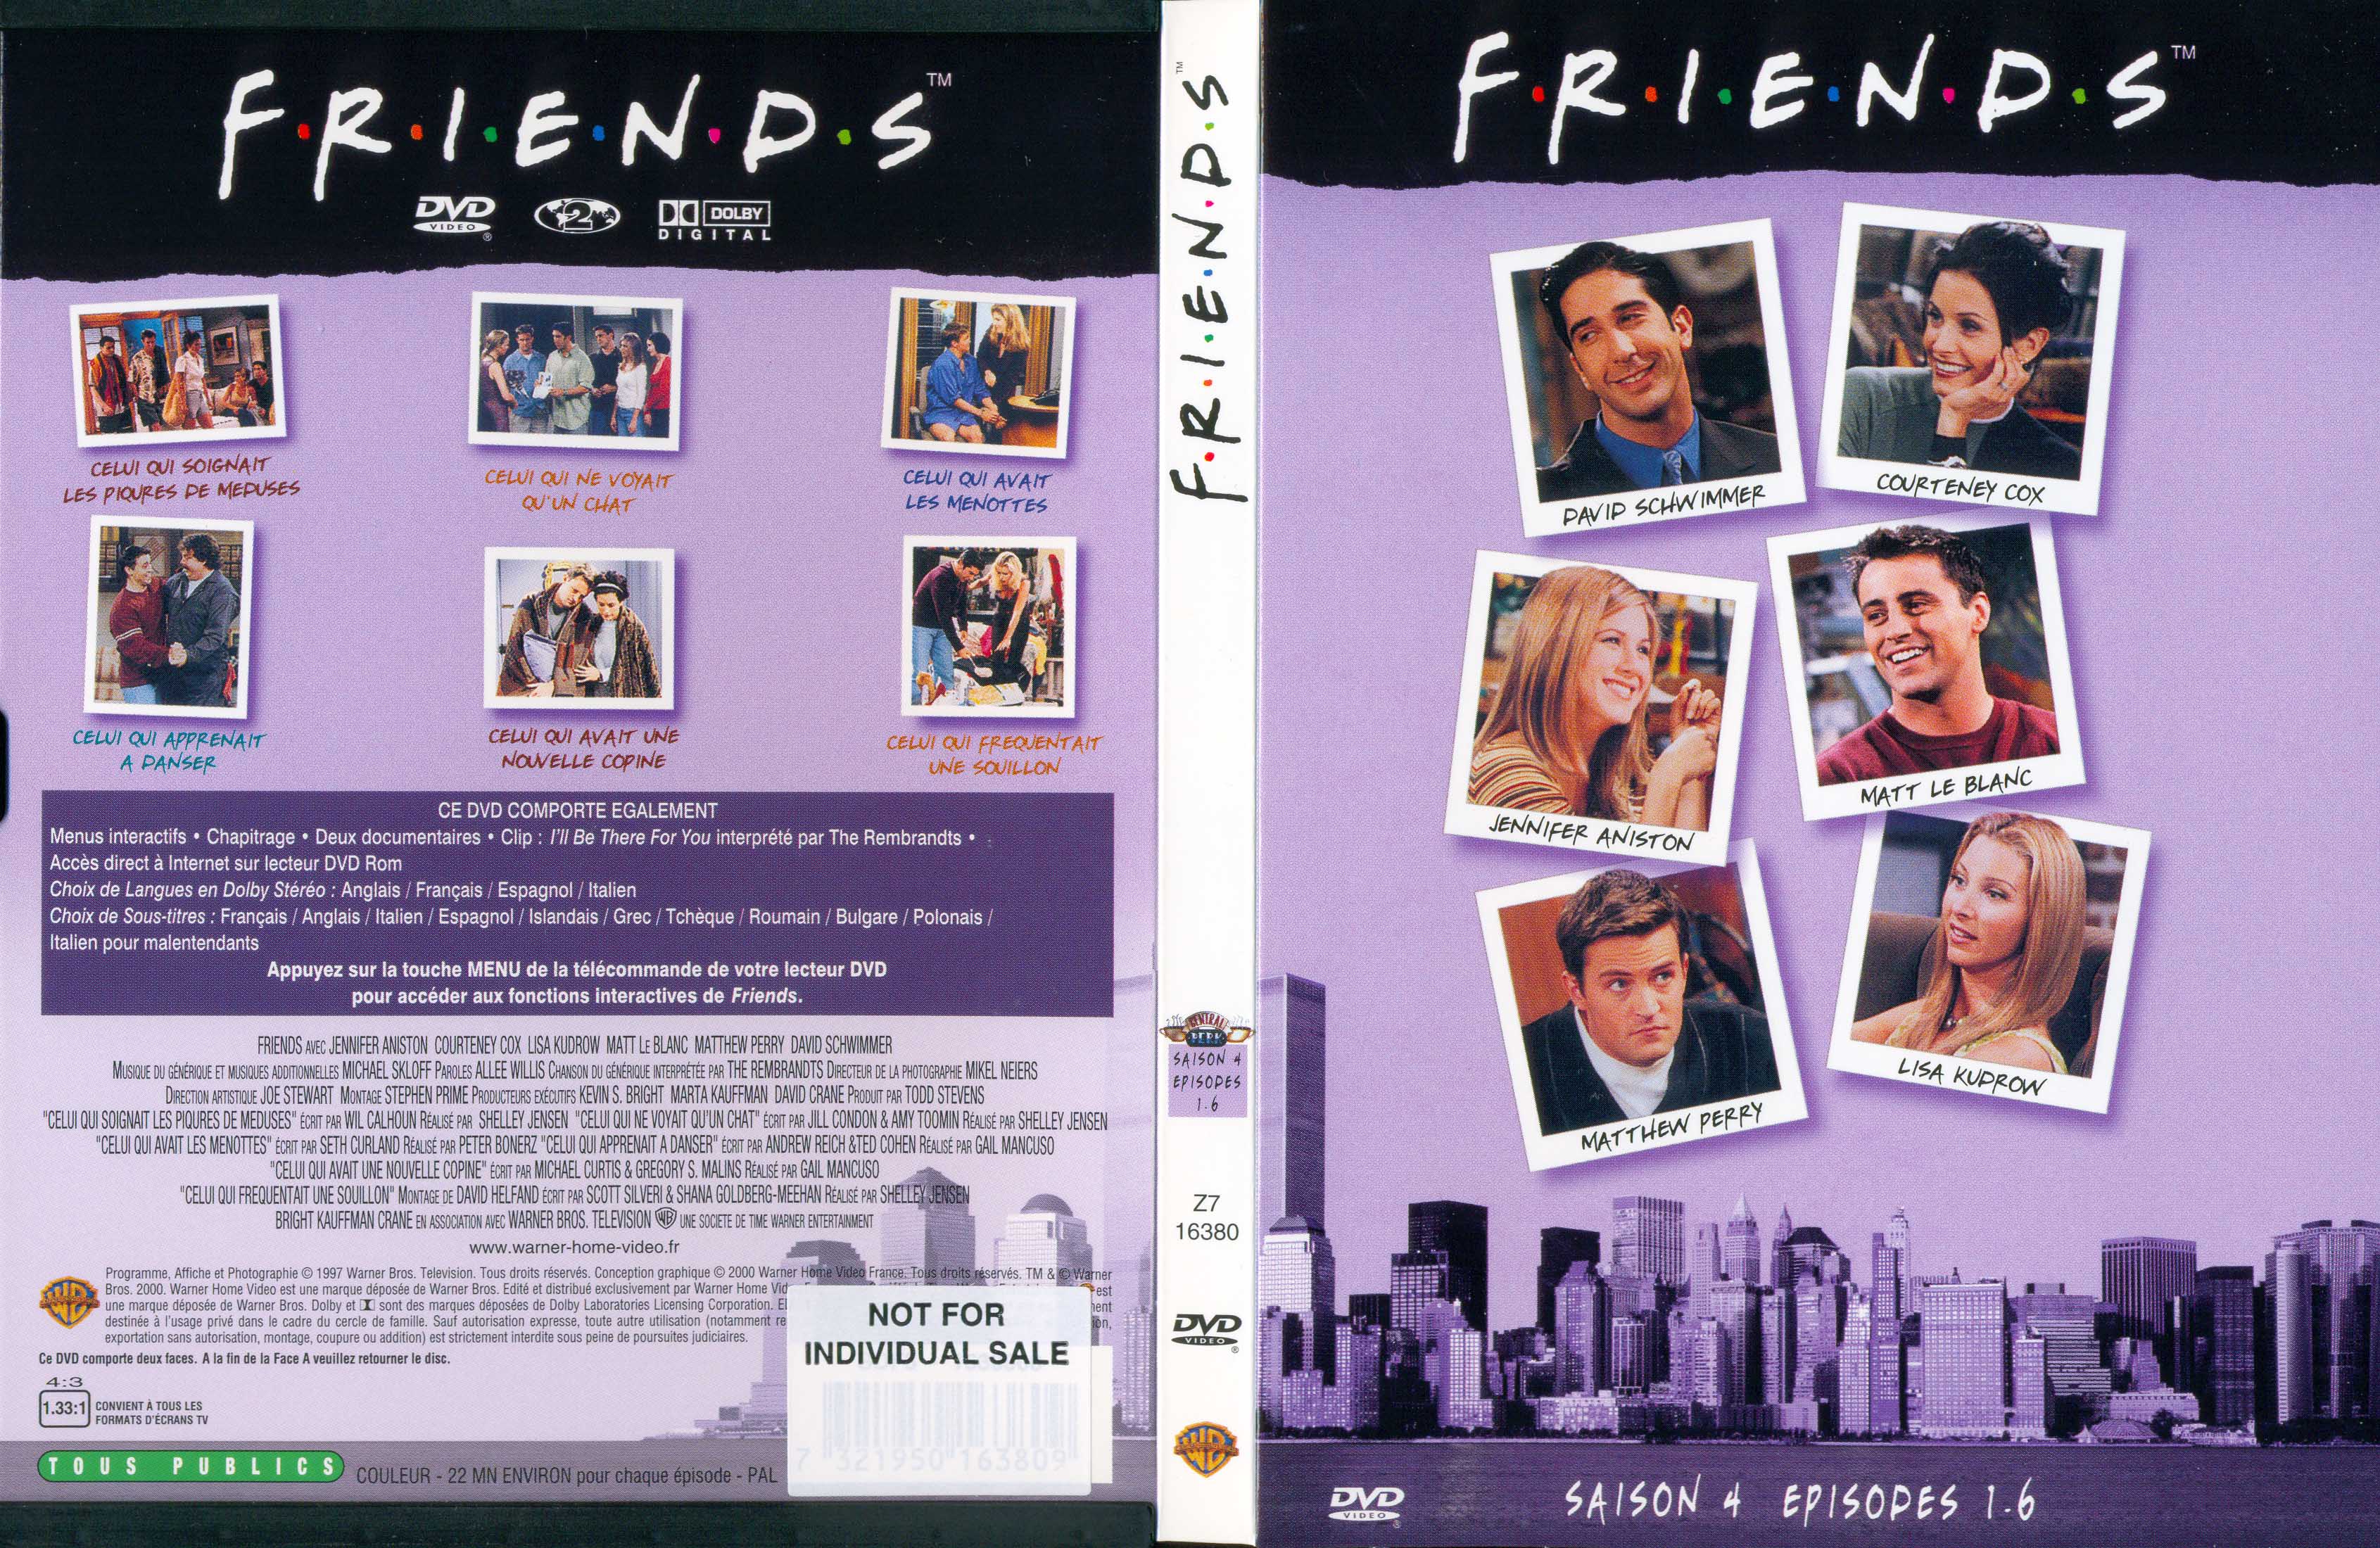 Jaquette DVD Friends saison 4 dvd 1